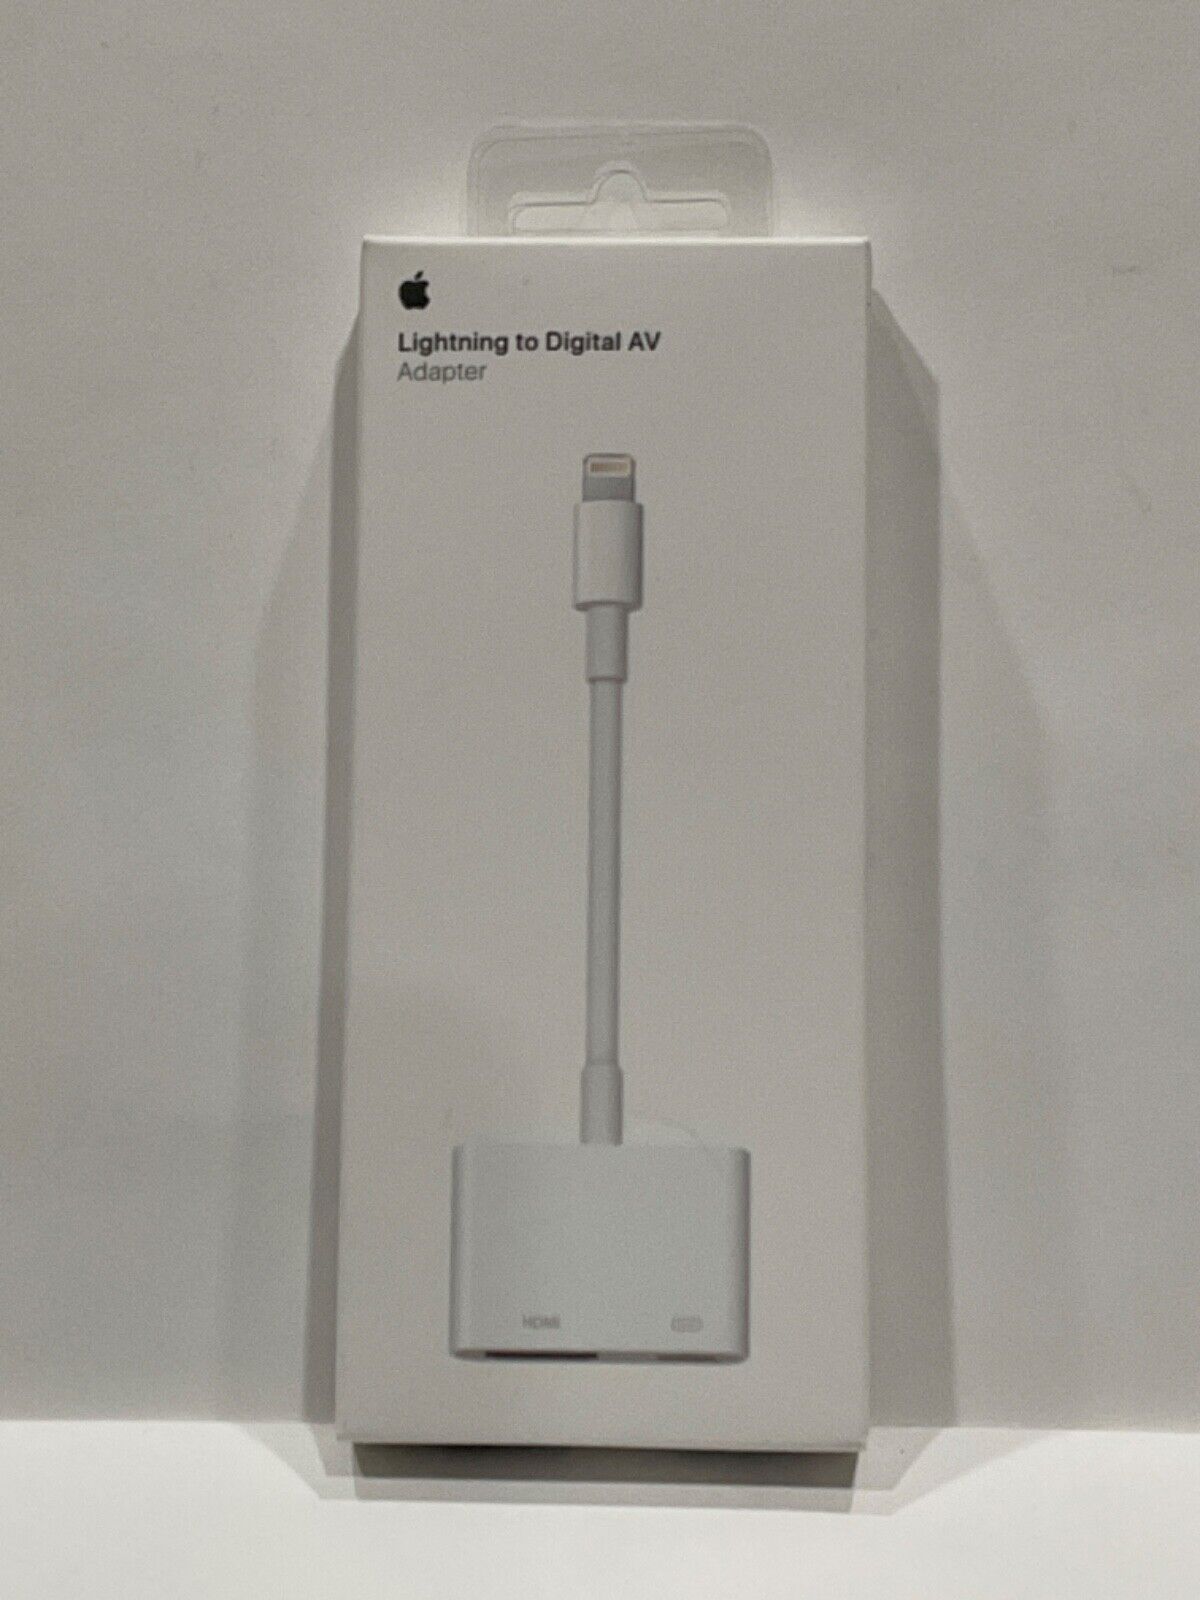 Apple Lightning Digital AV Adapter HDMI To iPhone iPad MD826AM/A - Brand New